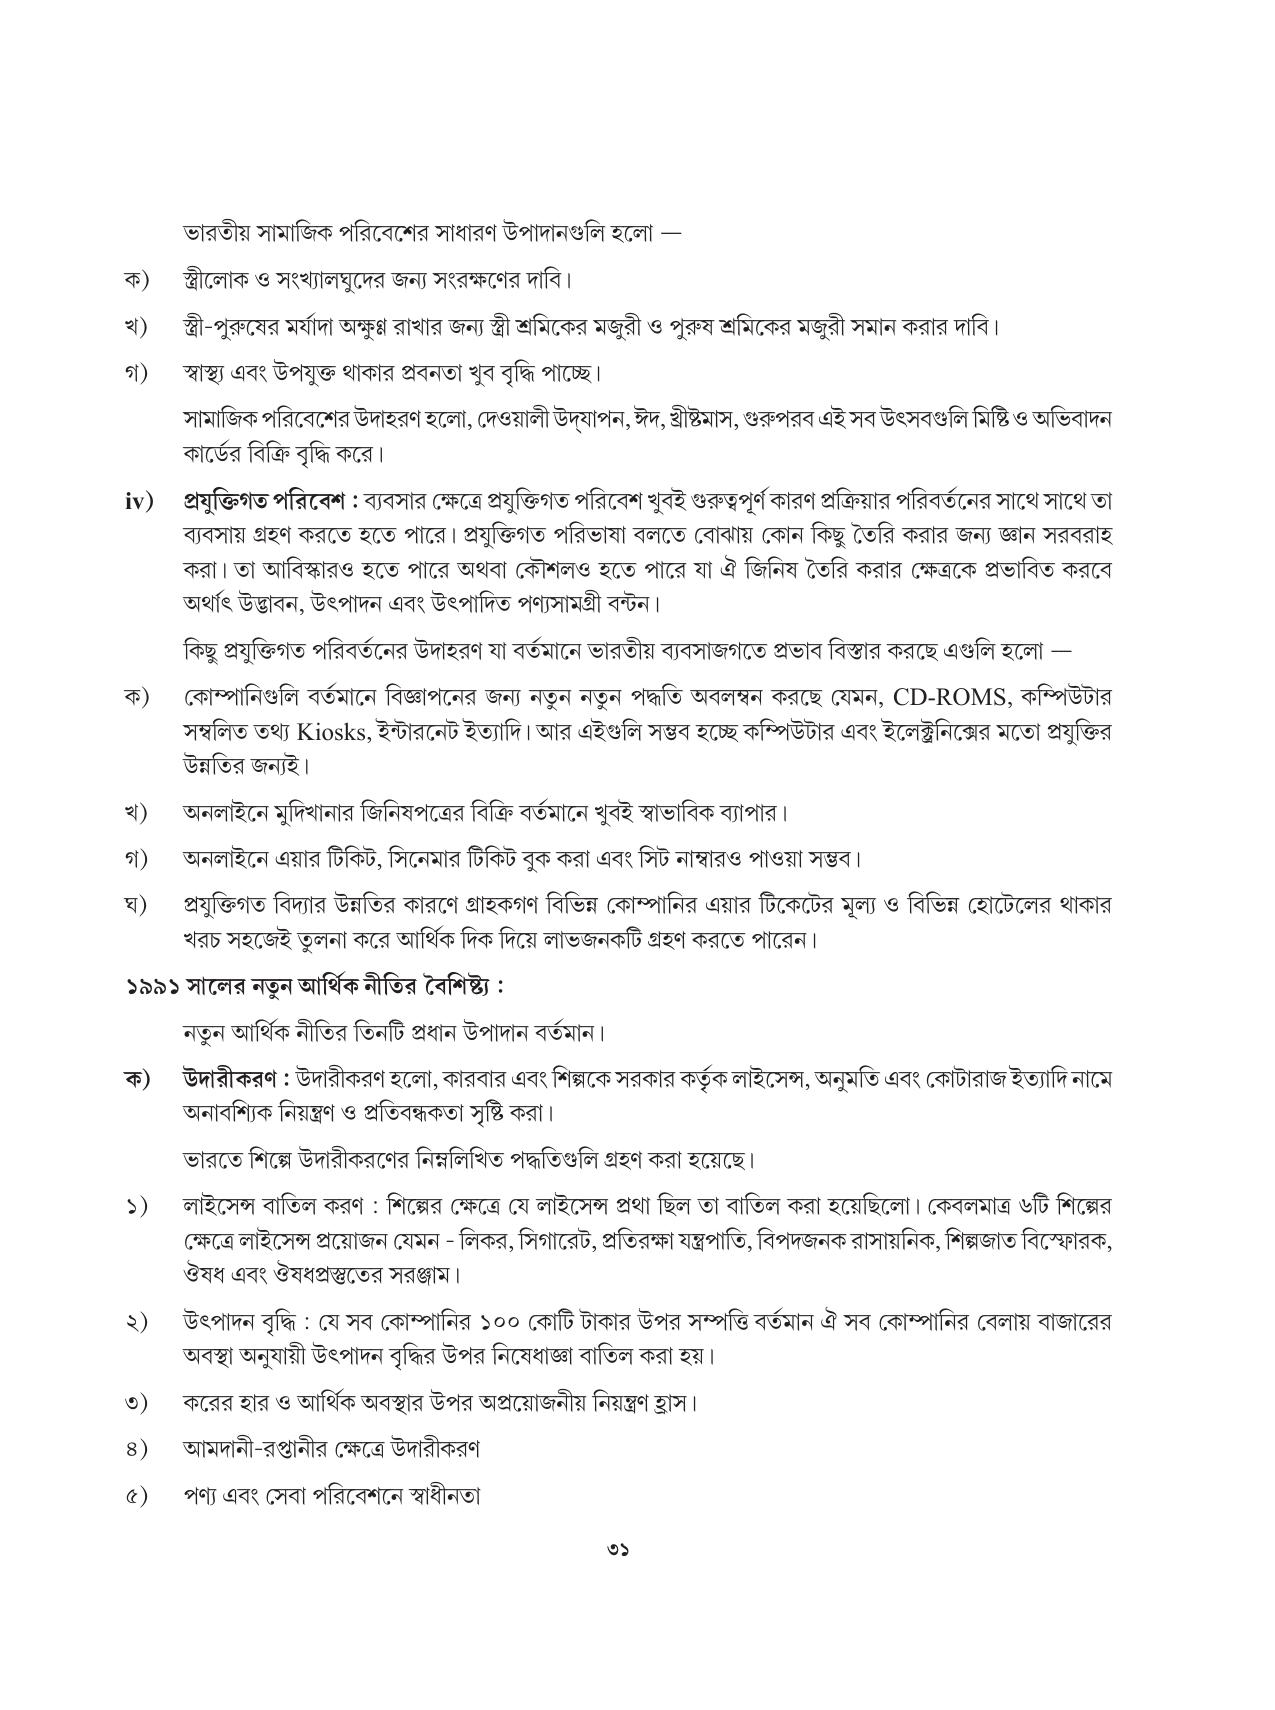 Tripura Board Class 12 Karbari Shastra Bengali Version Workbooks - Page 31